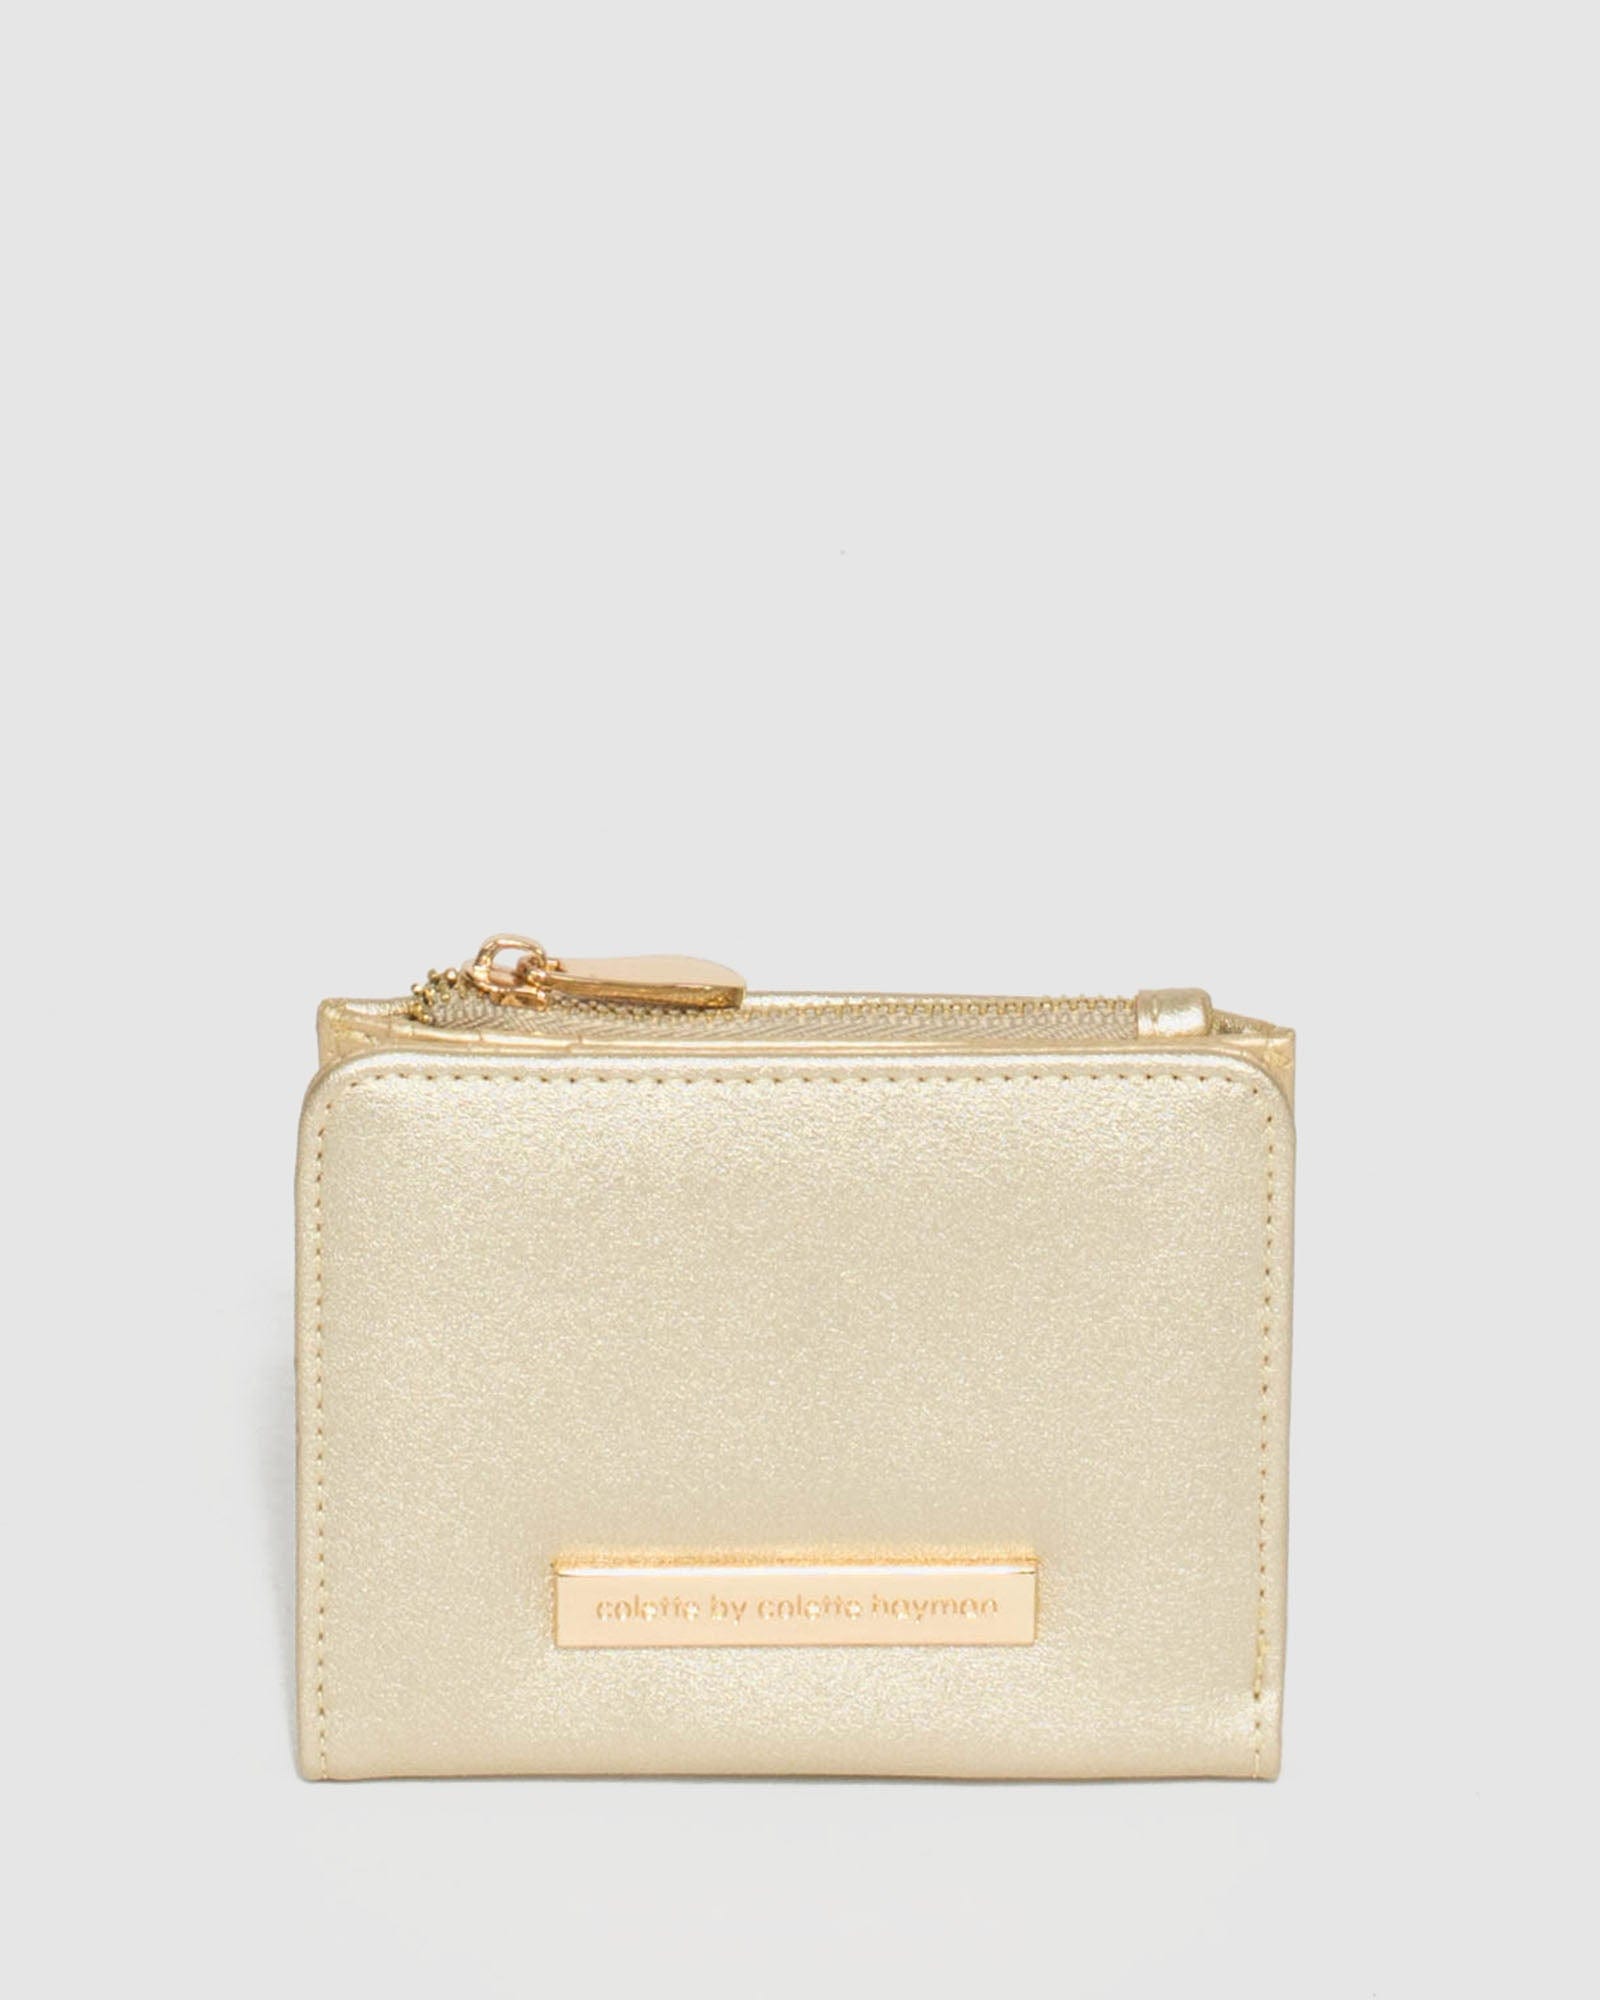 Colette Short Wallet